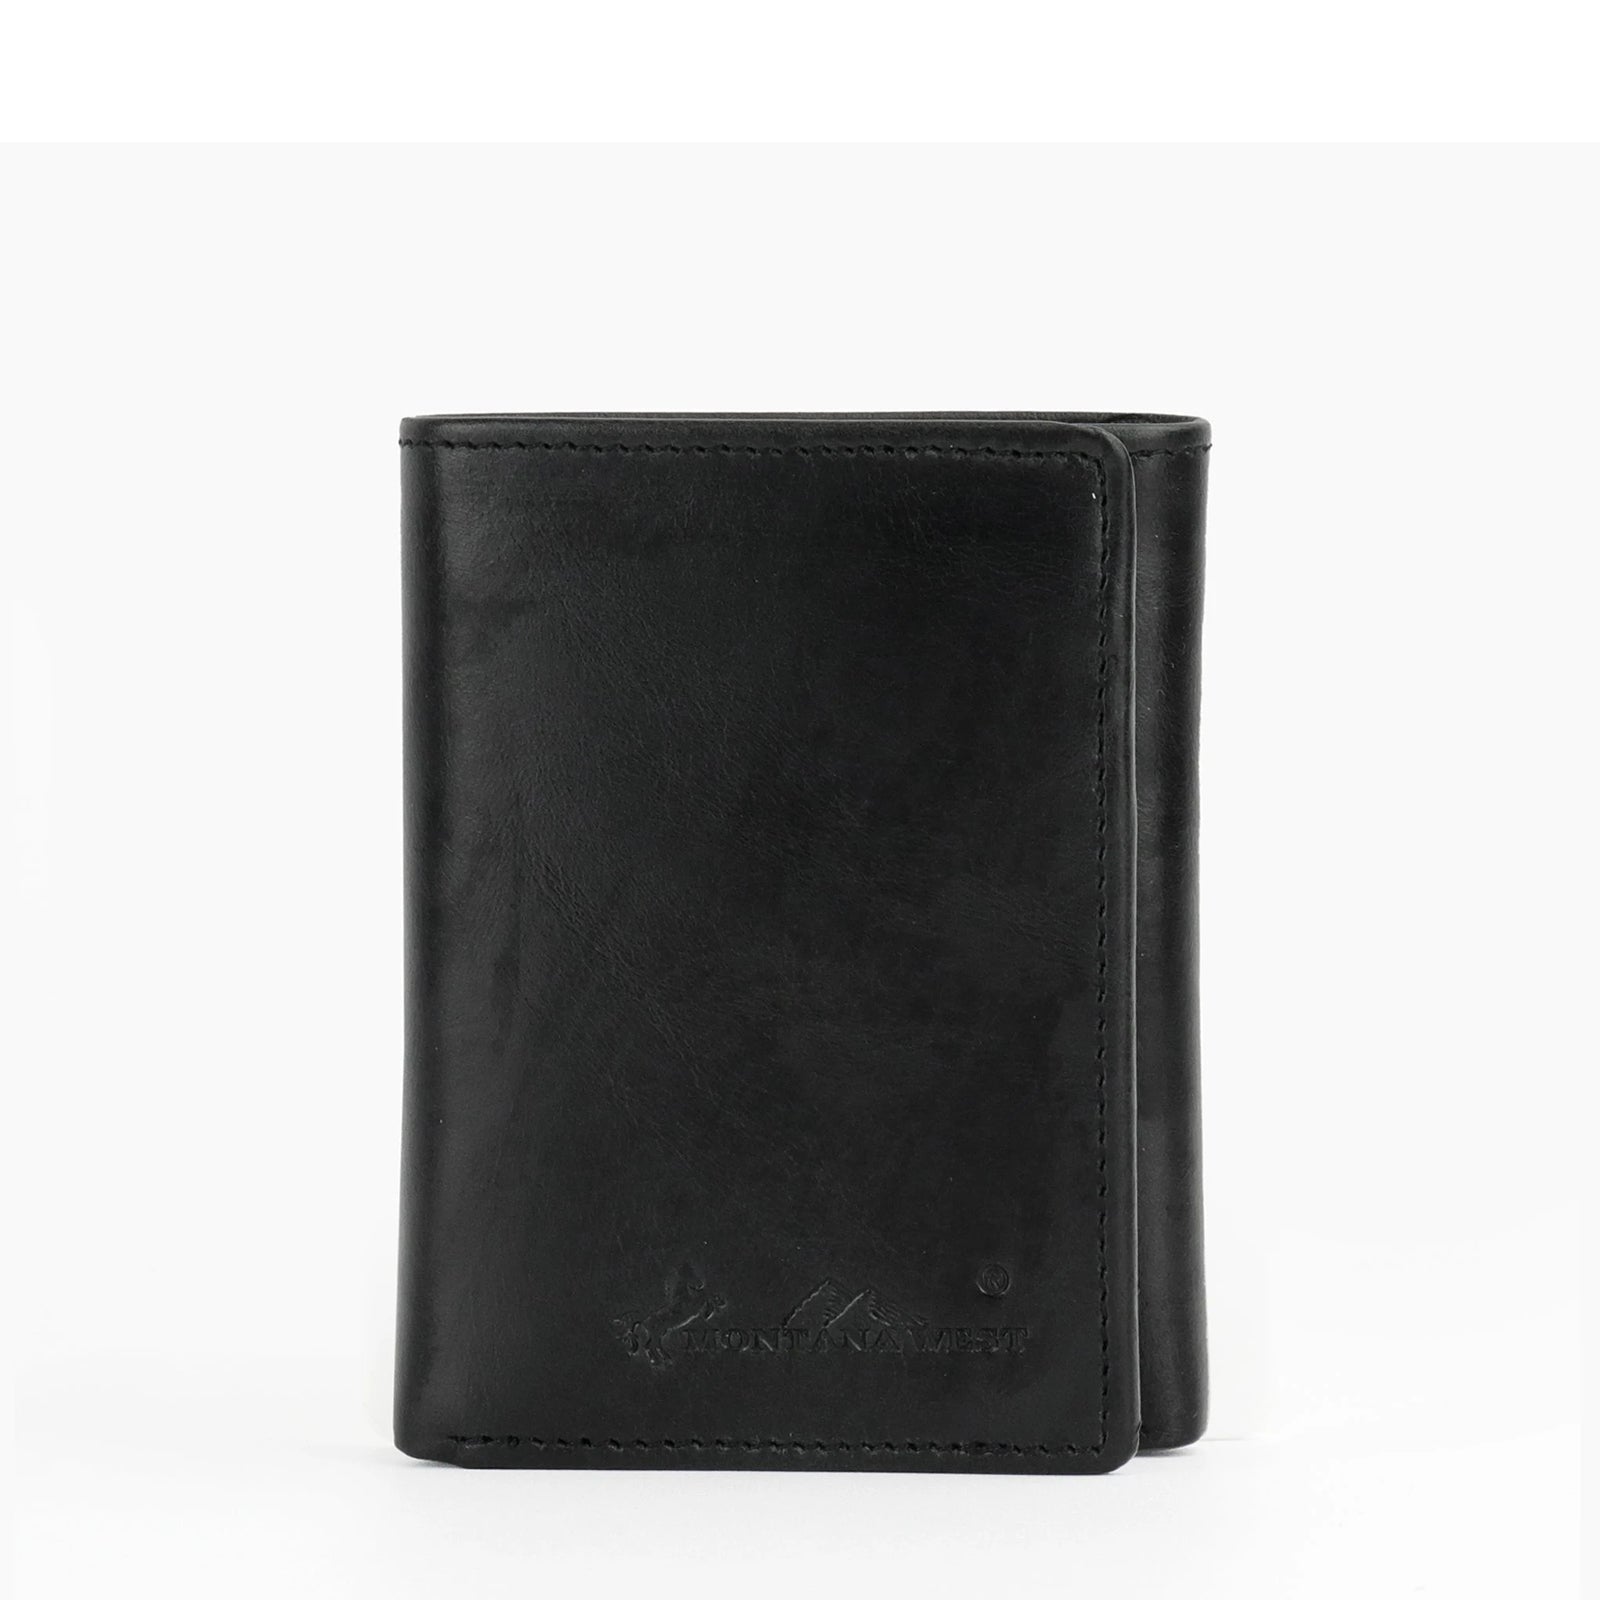 Genuine Leather Men's Tri-Fold Wallet - Cowgirl Wear